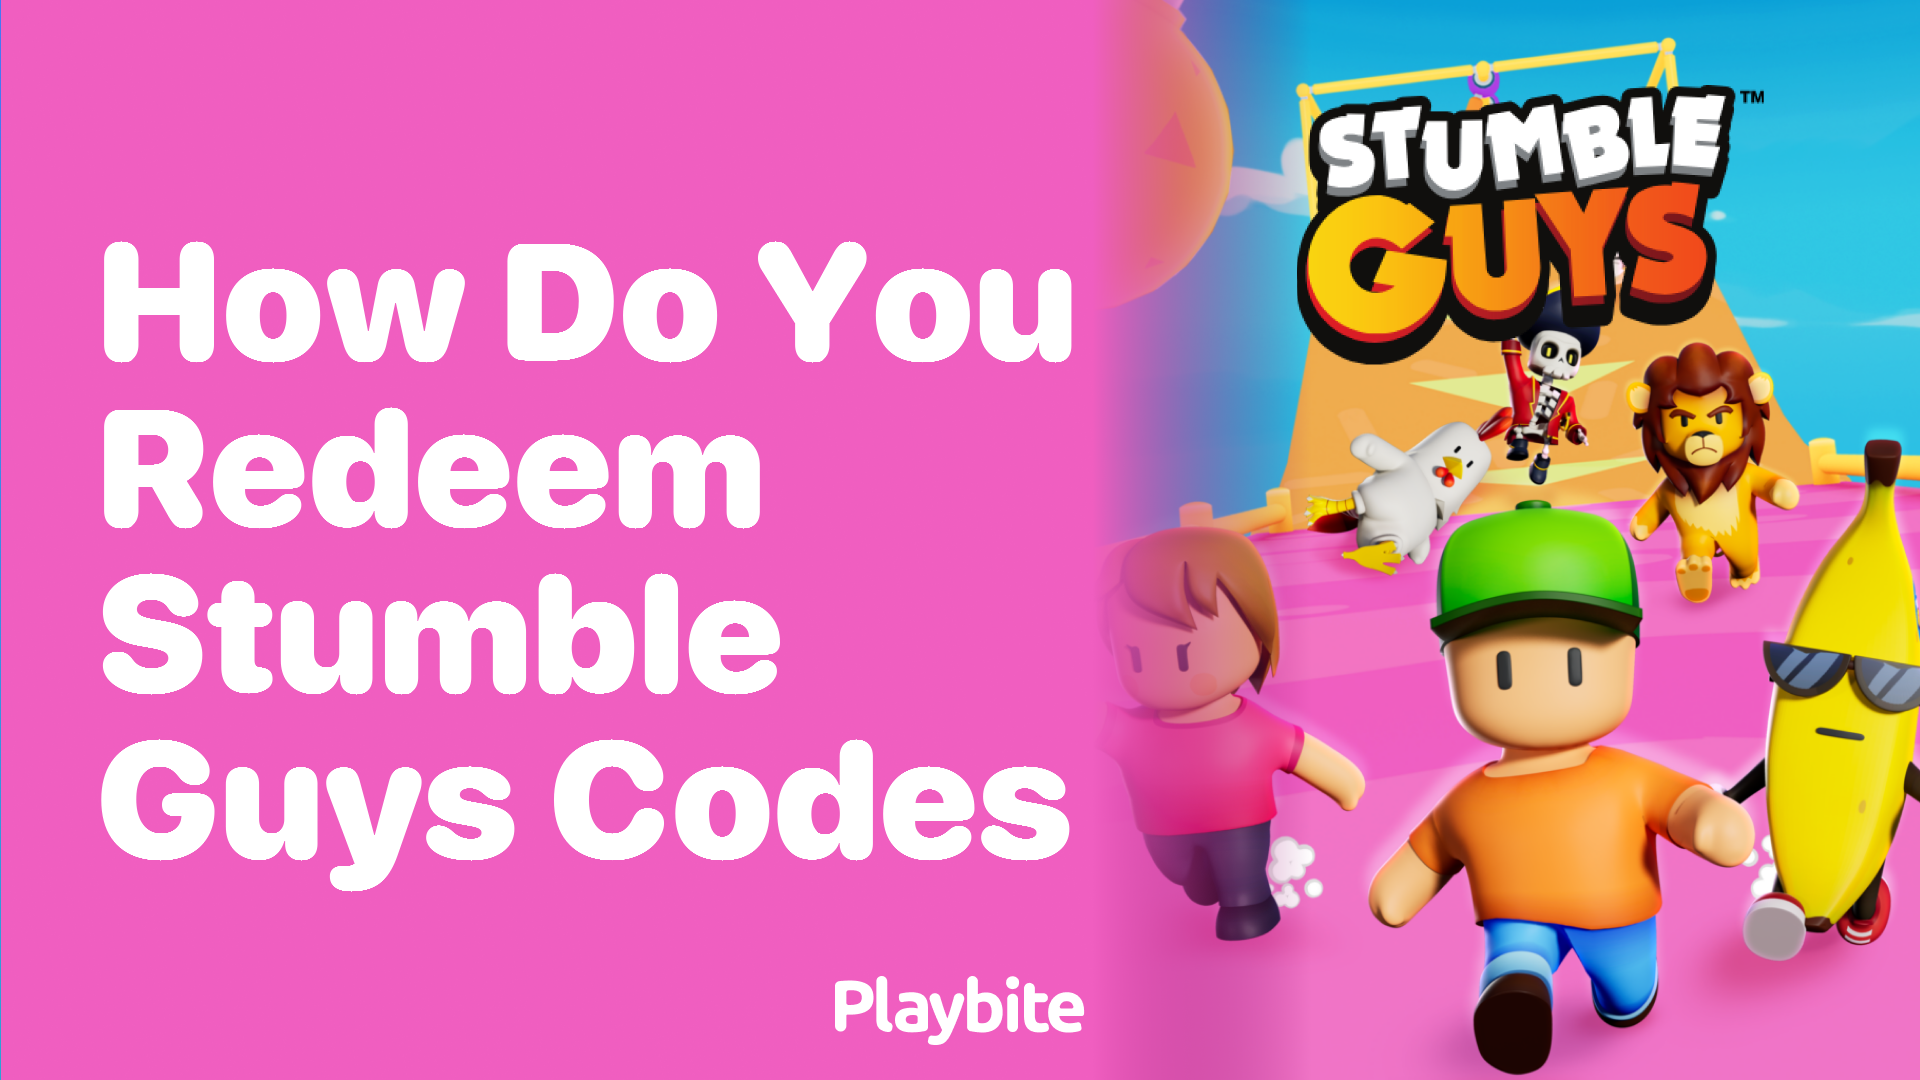 How Do You Redeem Stumble Guys Codes?